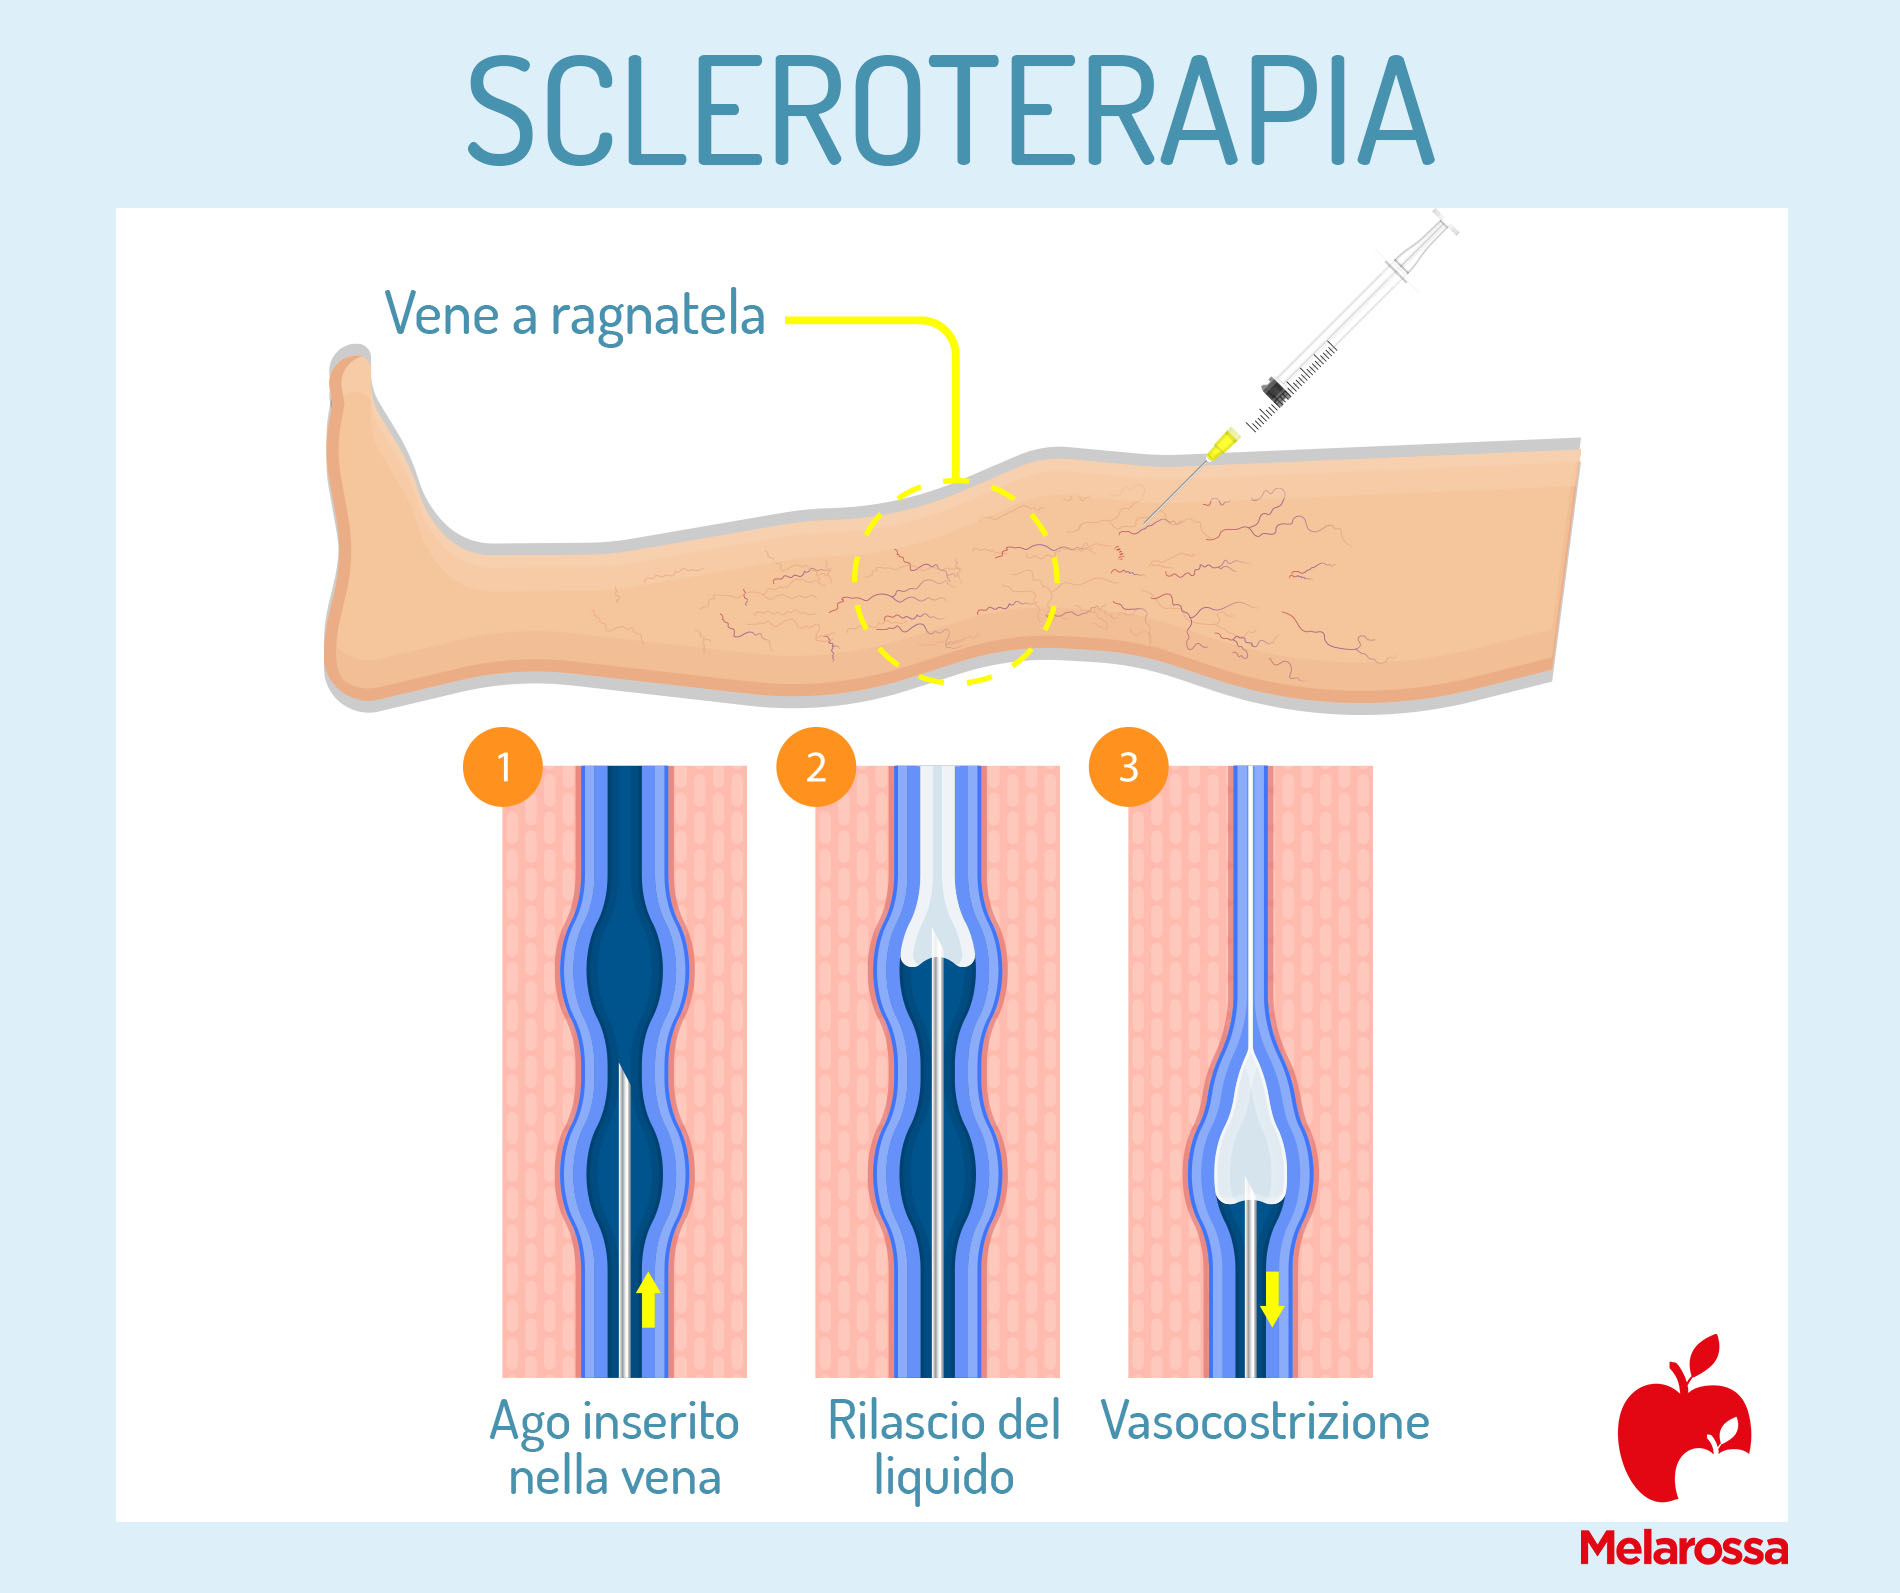 vene varicose: scleroterapia